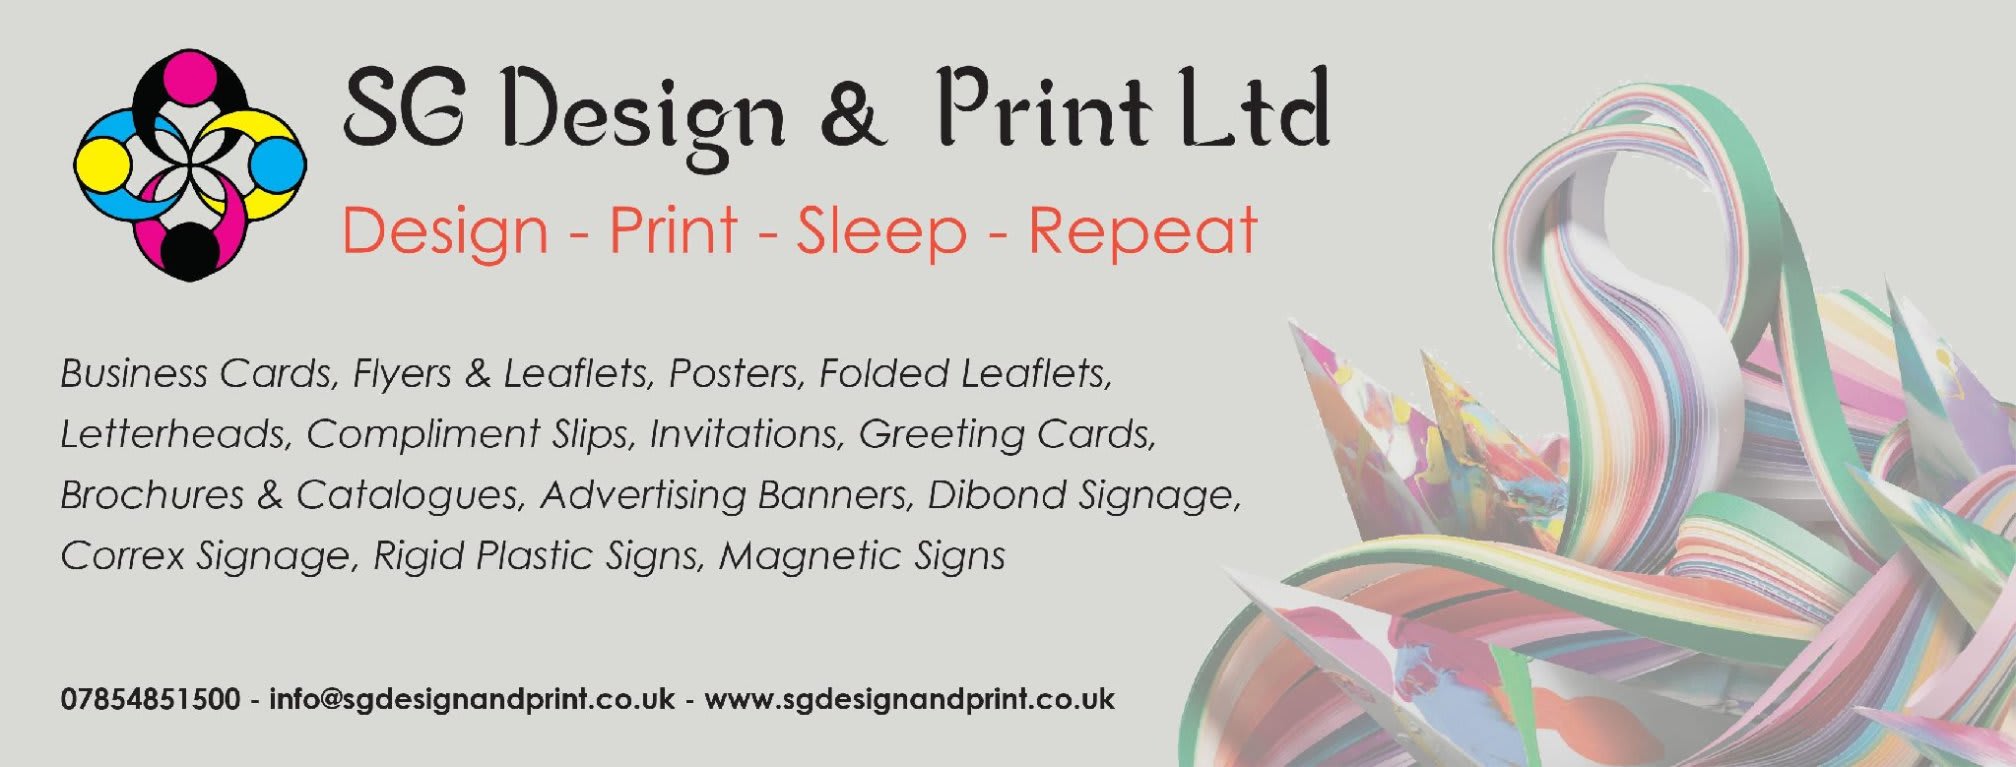 SG Design & Print Ltd Liverpool 07854 851500